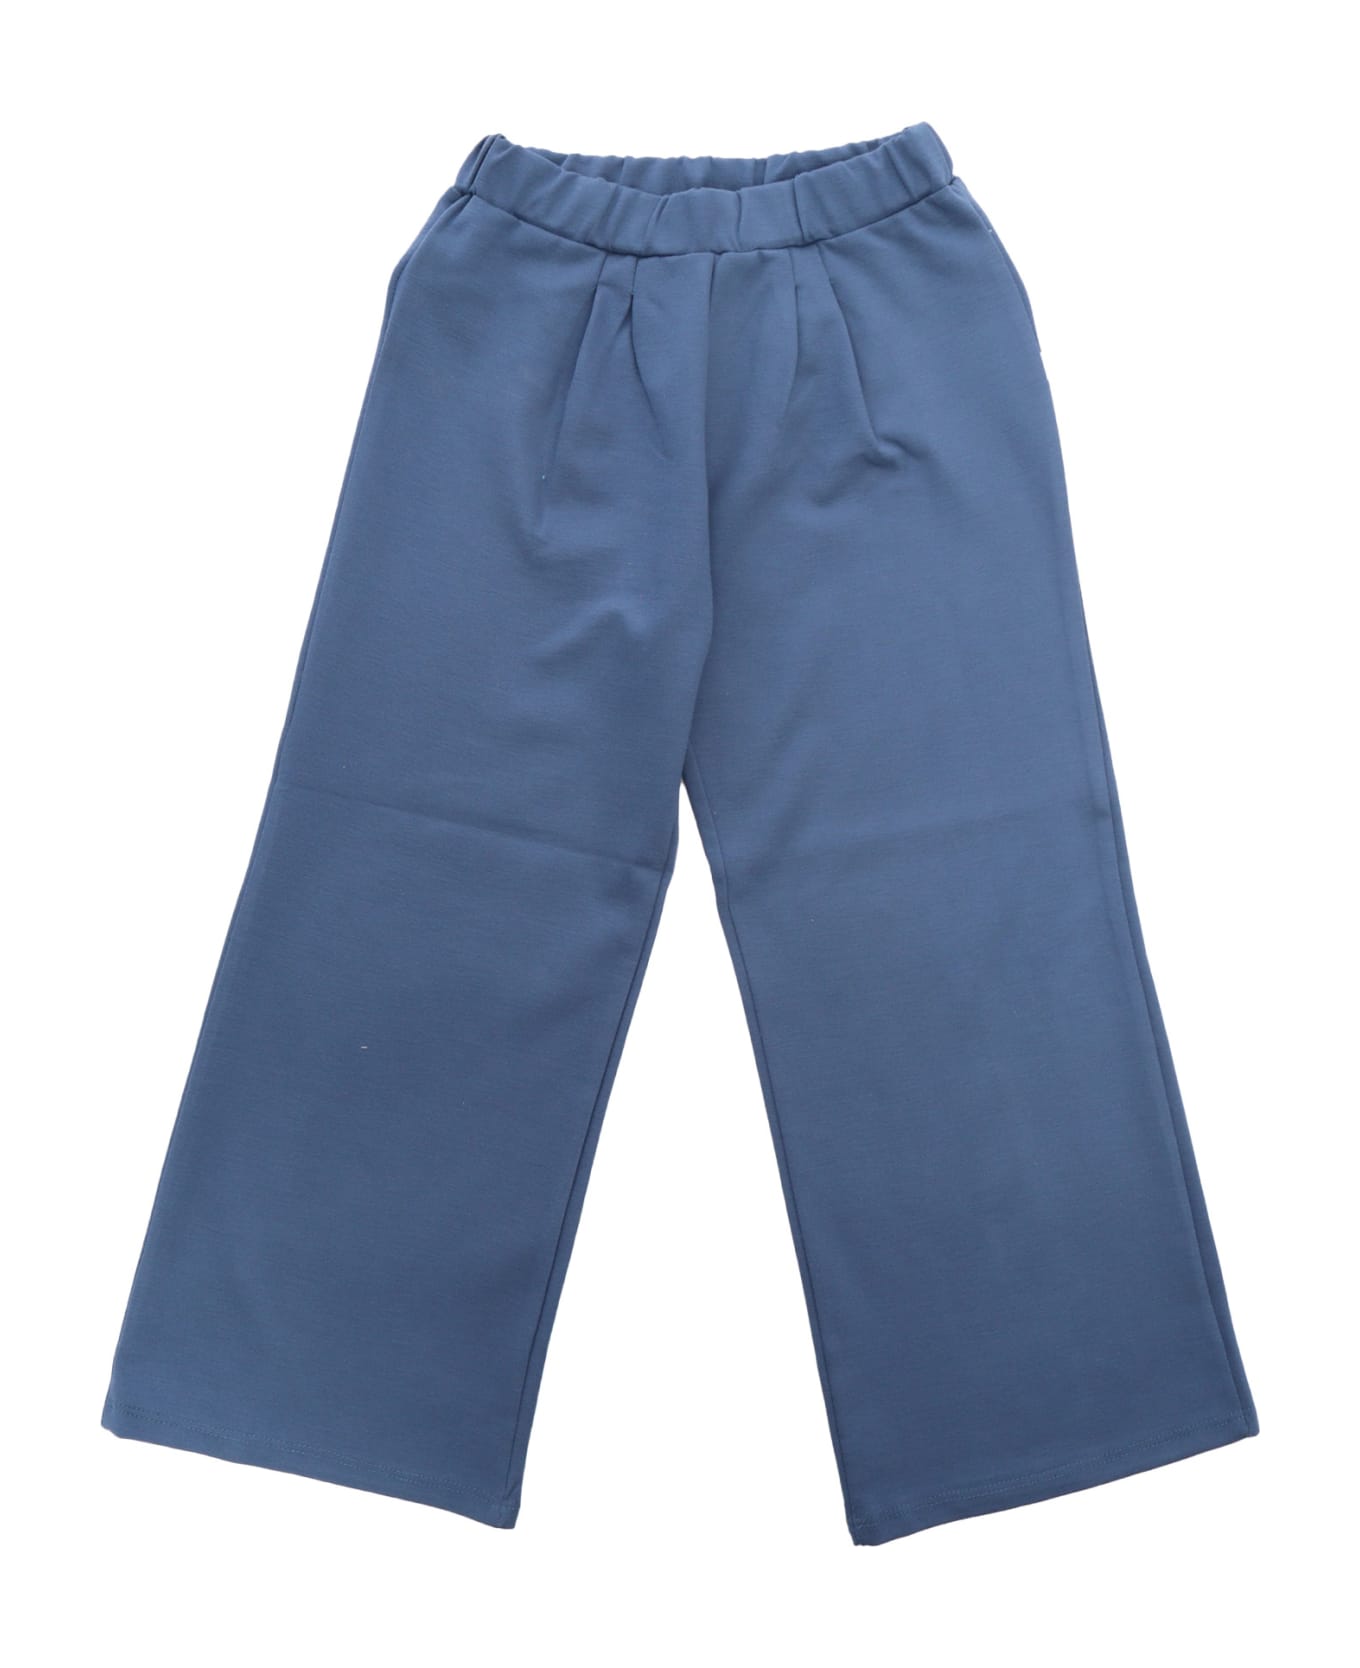 Magil Milano Stitch Gaucho Pants - LIGHT BLUE